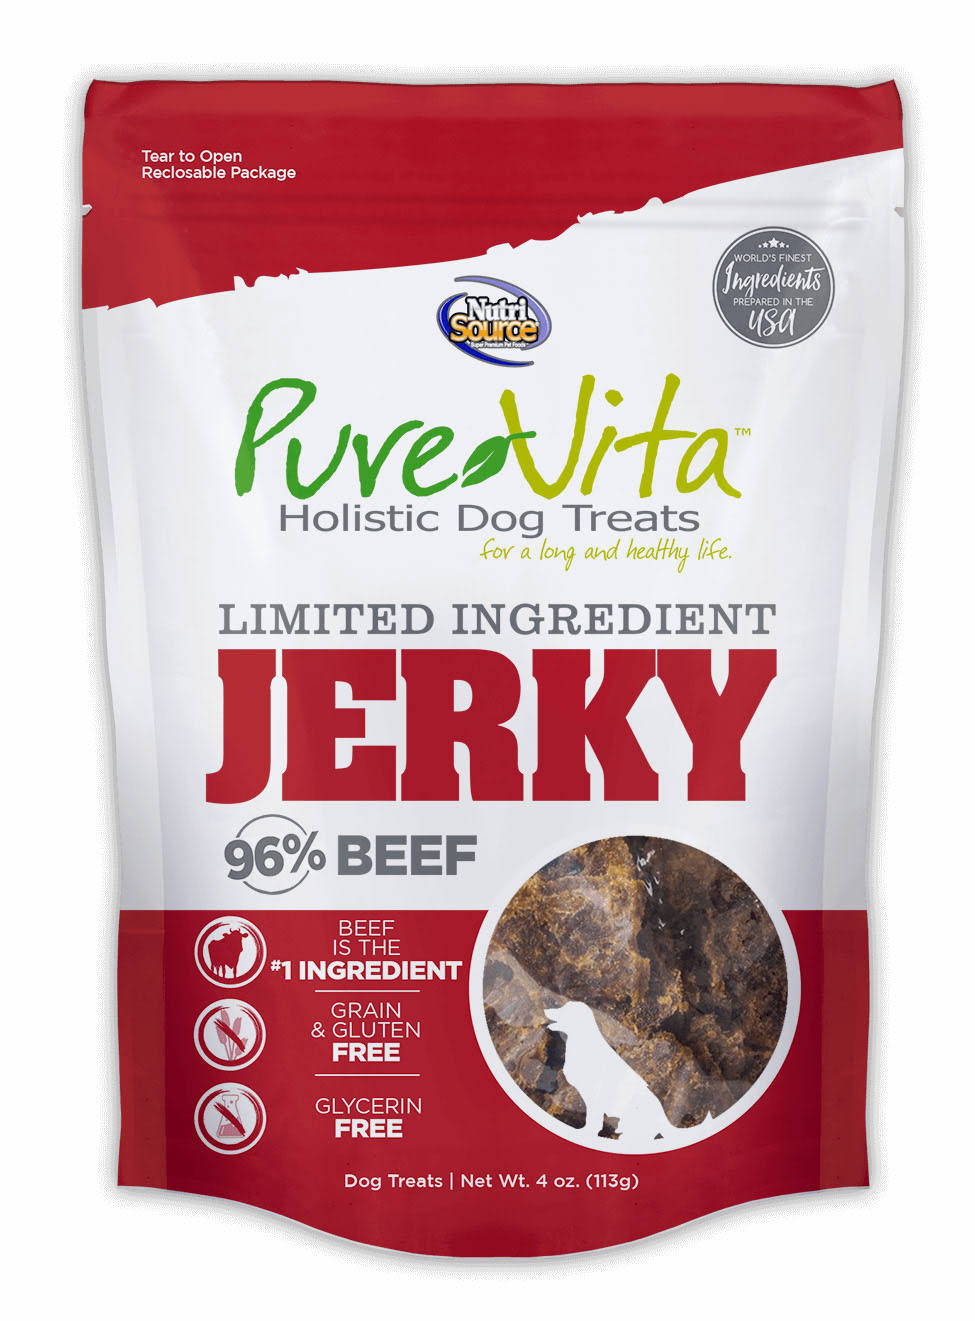 PureVita Limited Ingredient 96% Beef Jerky Holistic Dog Treats - 4 oz